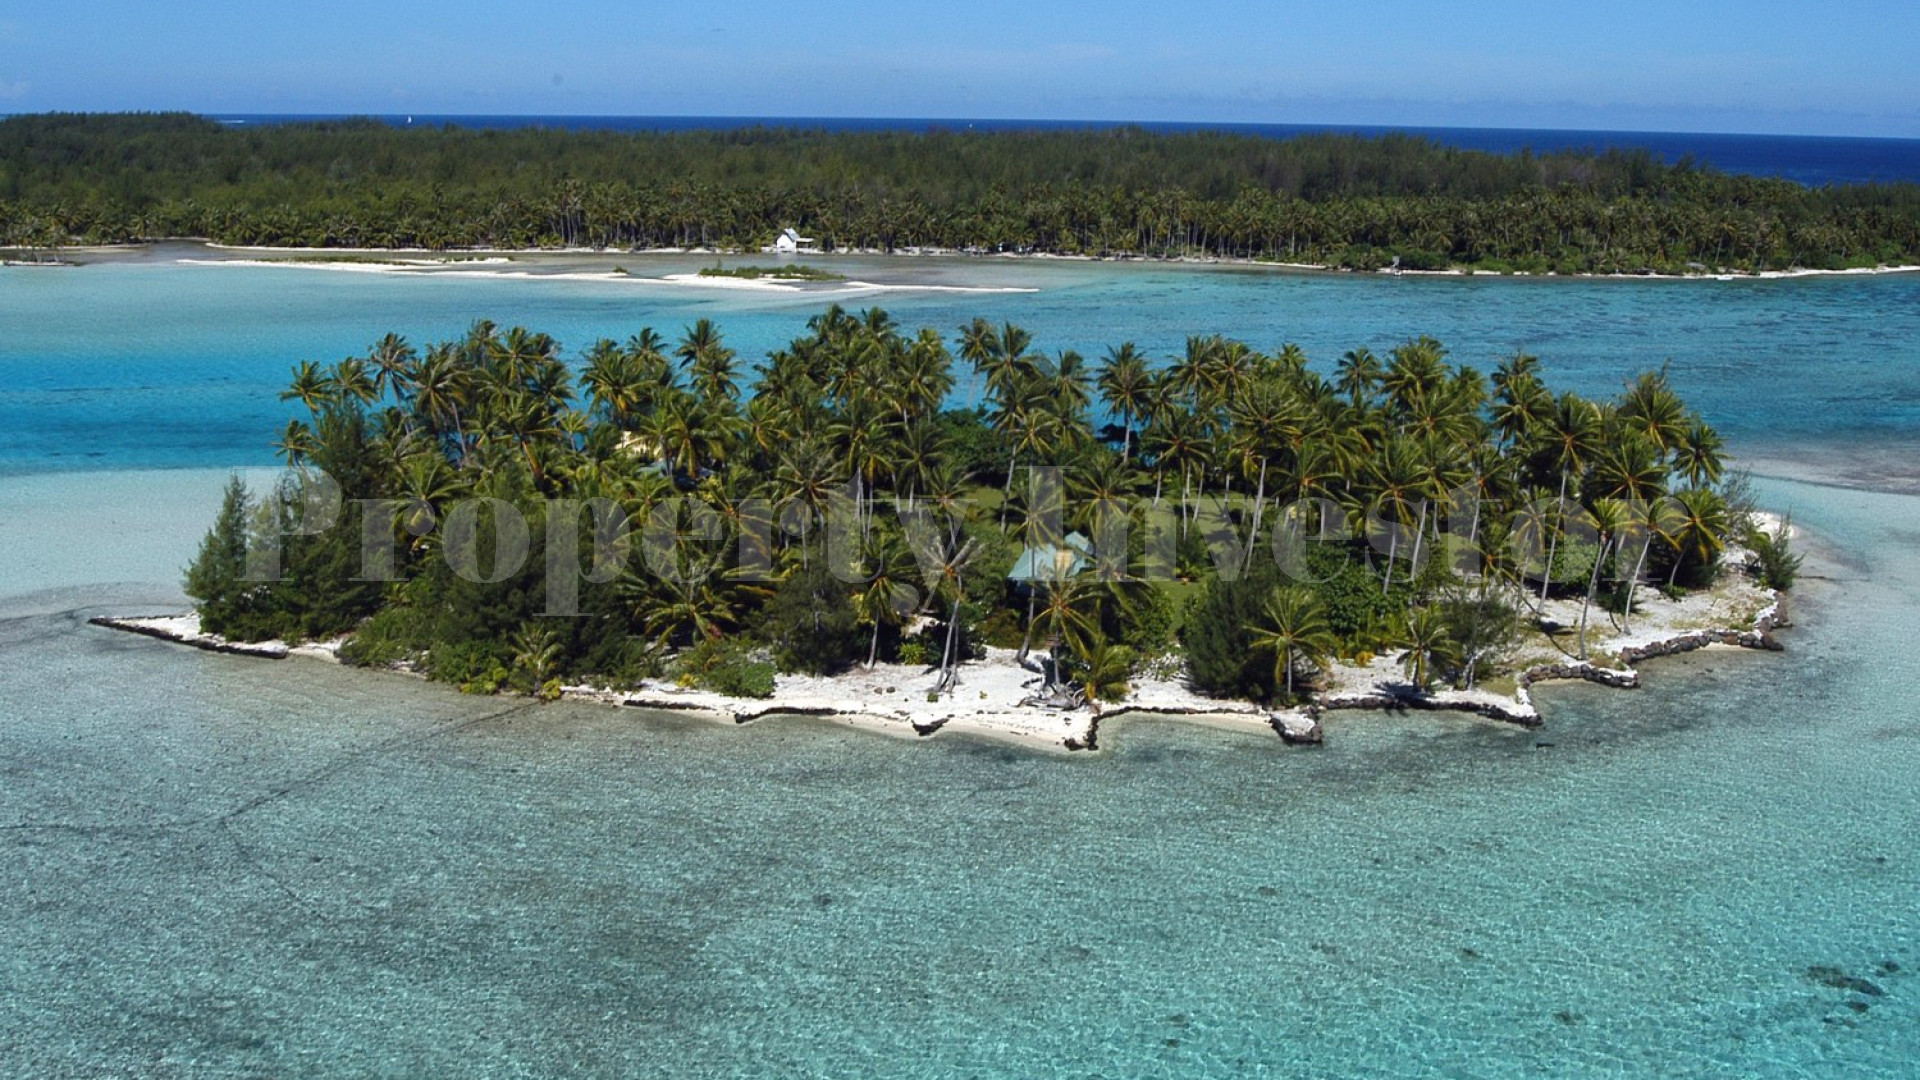 Private Island Residence Dream Location with Amazing Views of Bora Bora